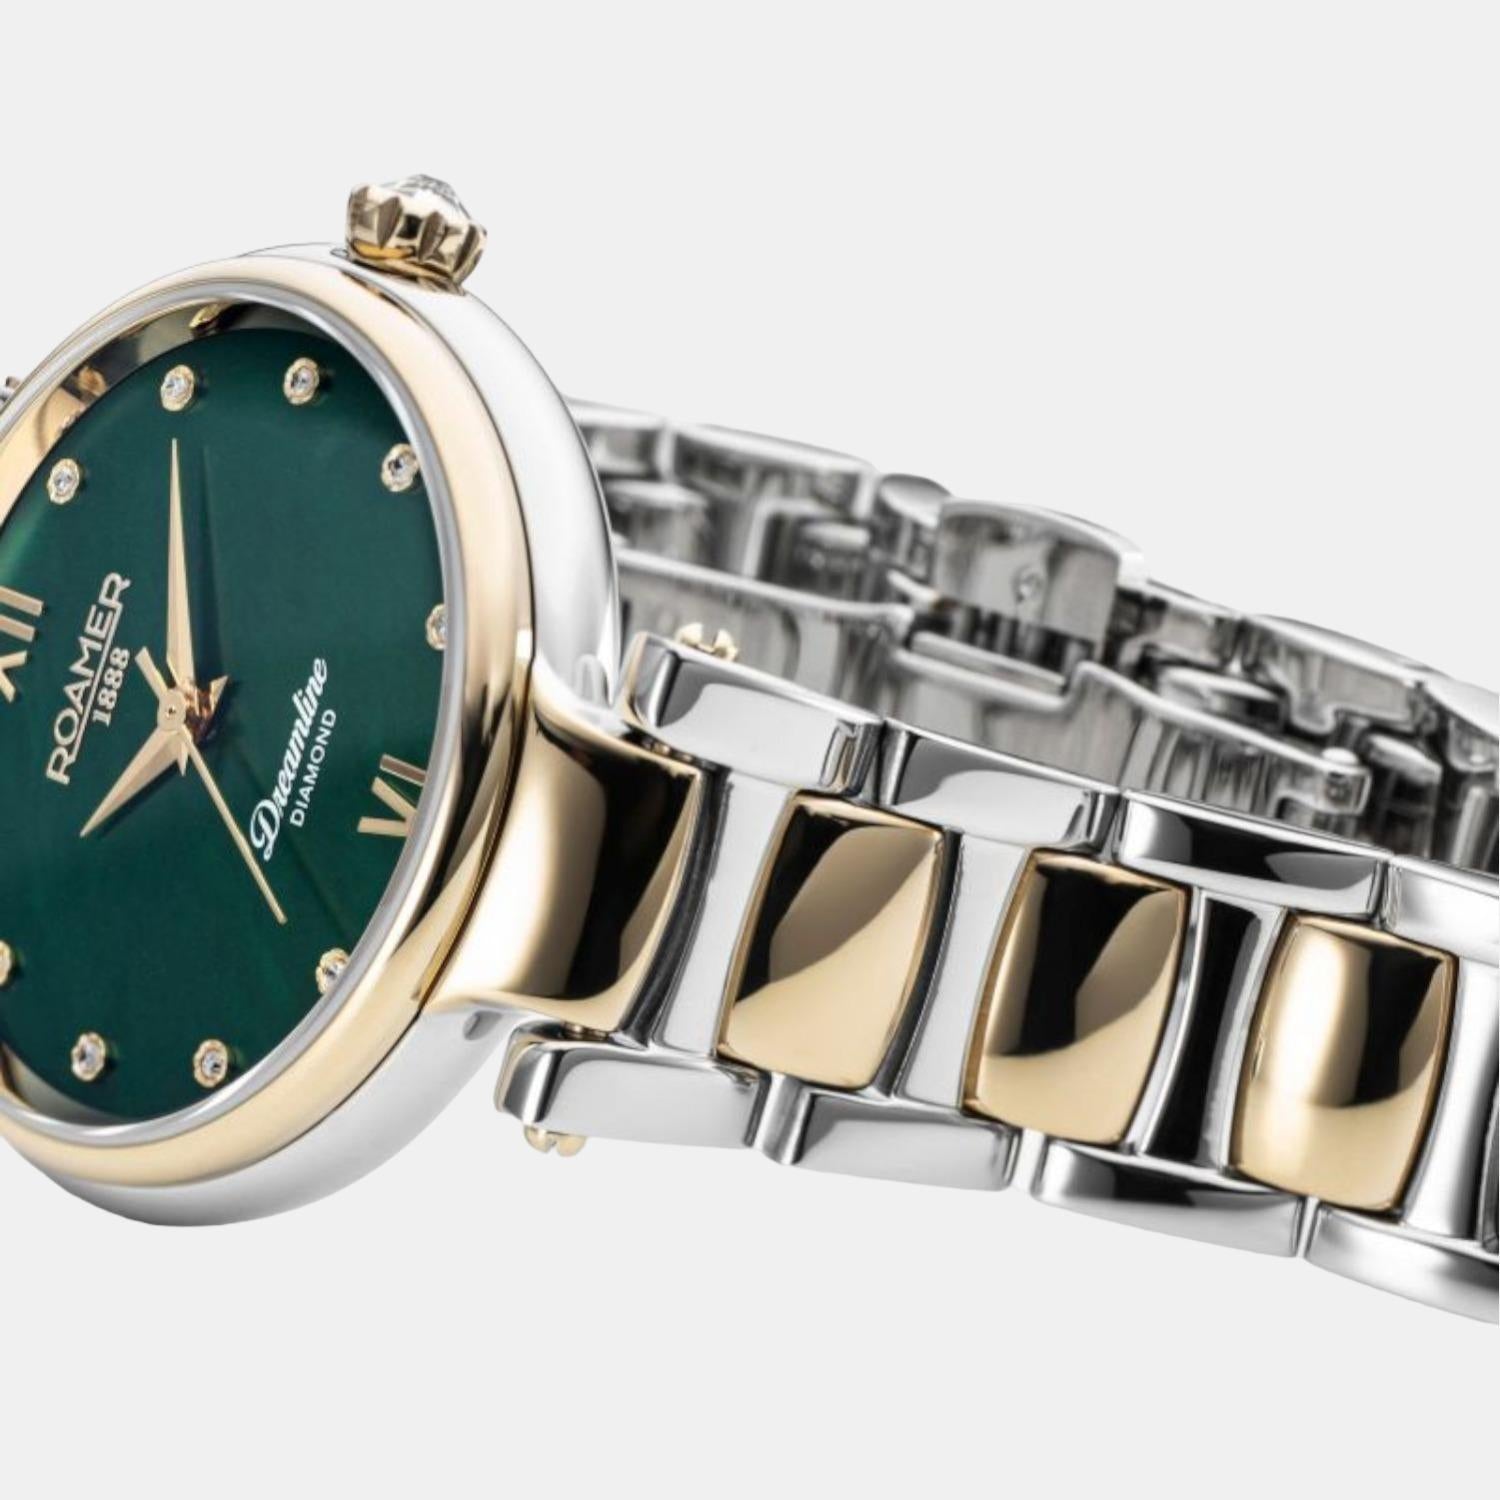 roamer-stainless-steel-green-analog-female-watch-857847-47-79-50